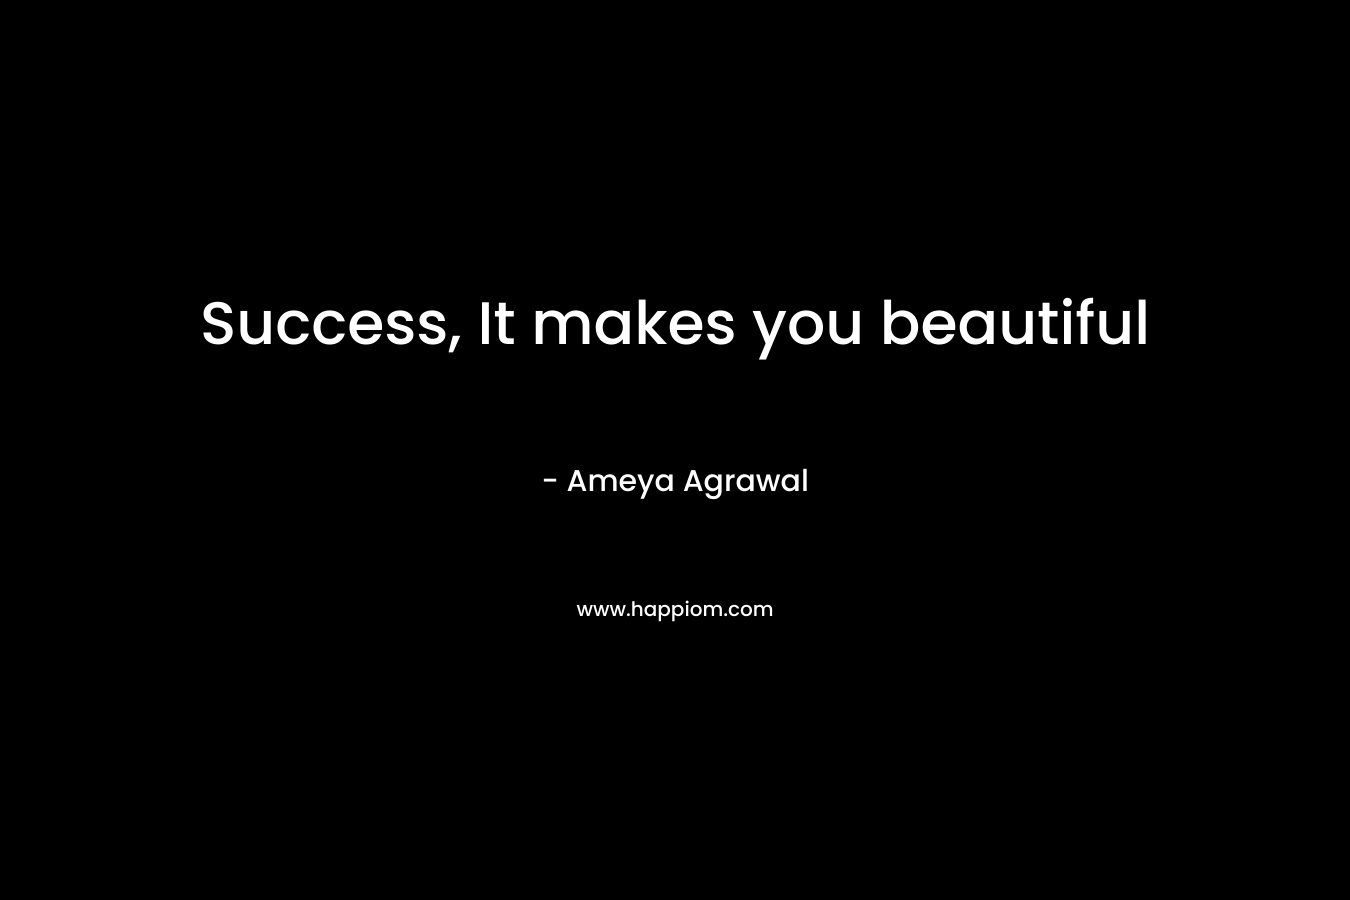 Success, It makes you beautiful